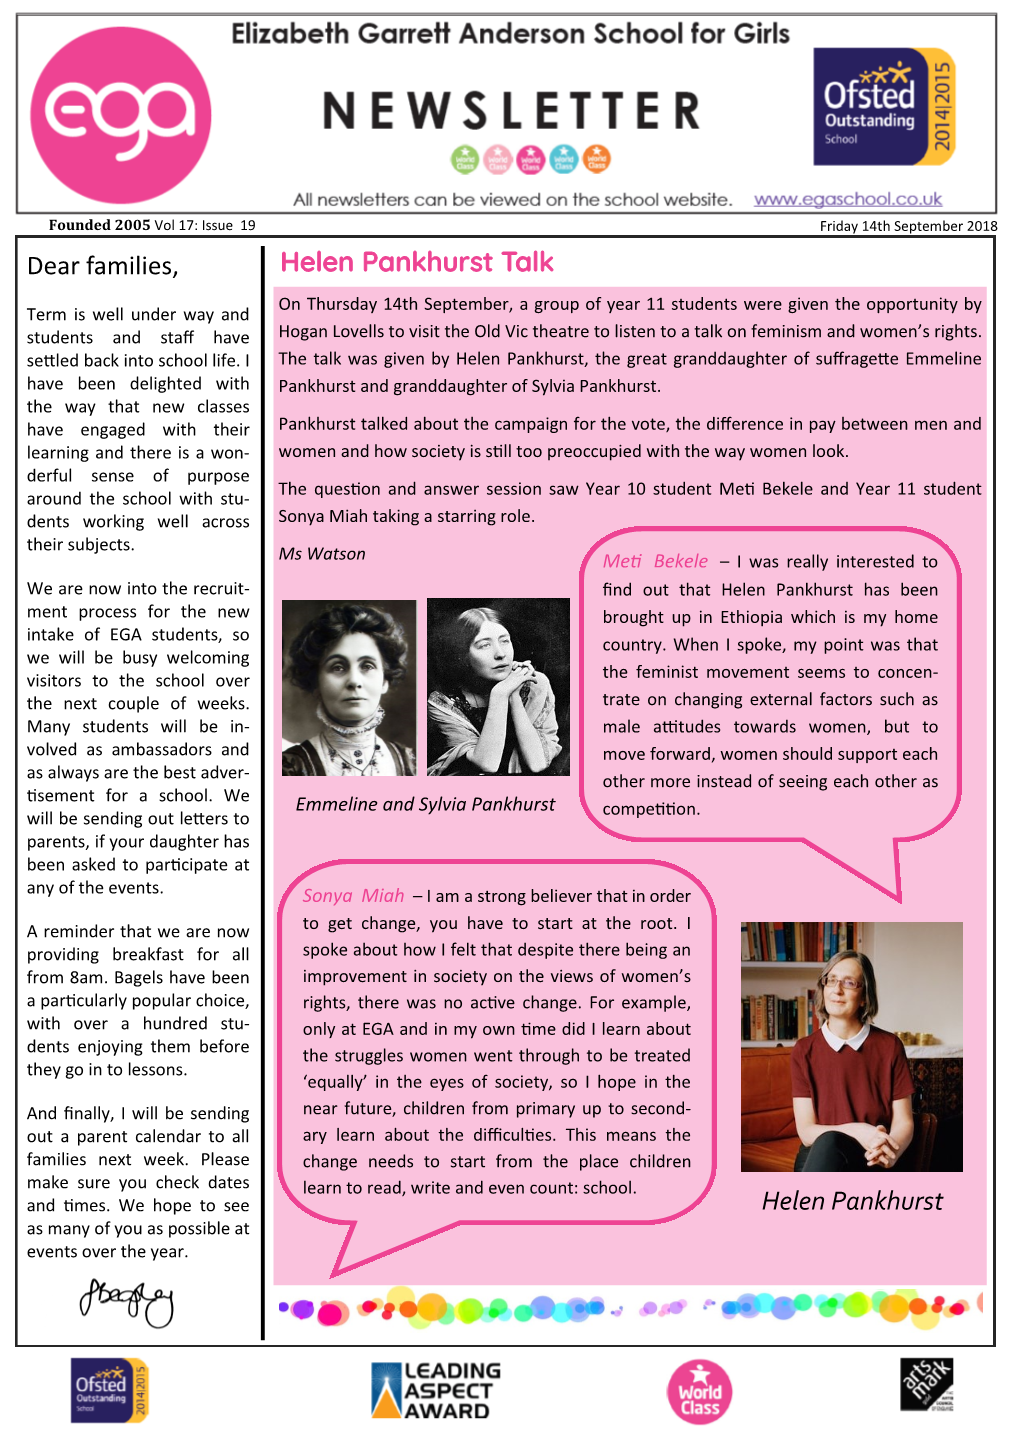 Helen Pankhurst Talk